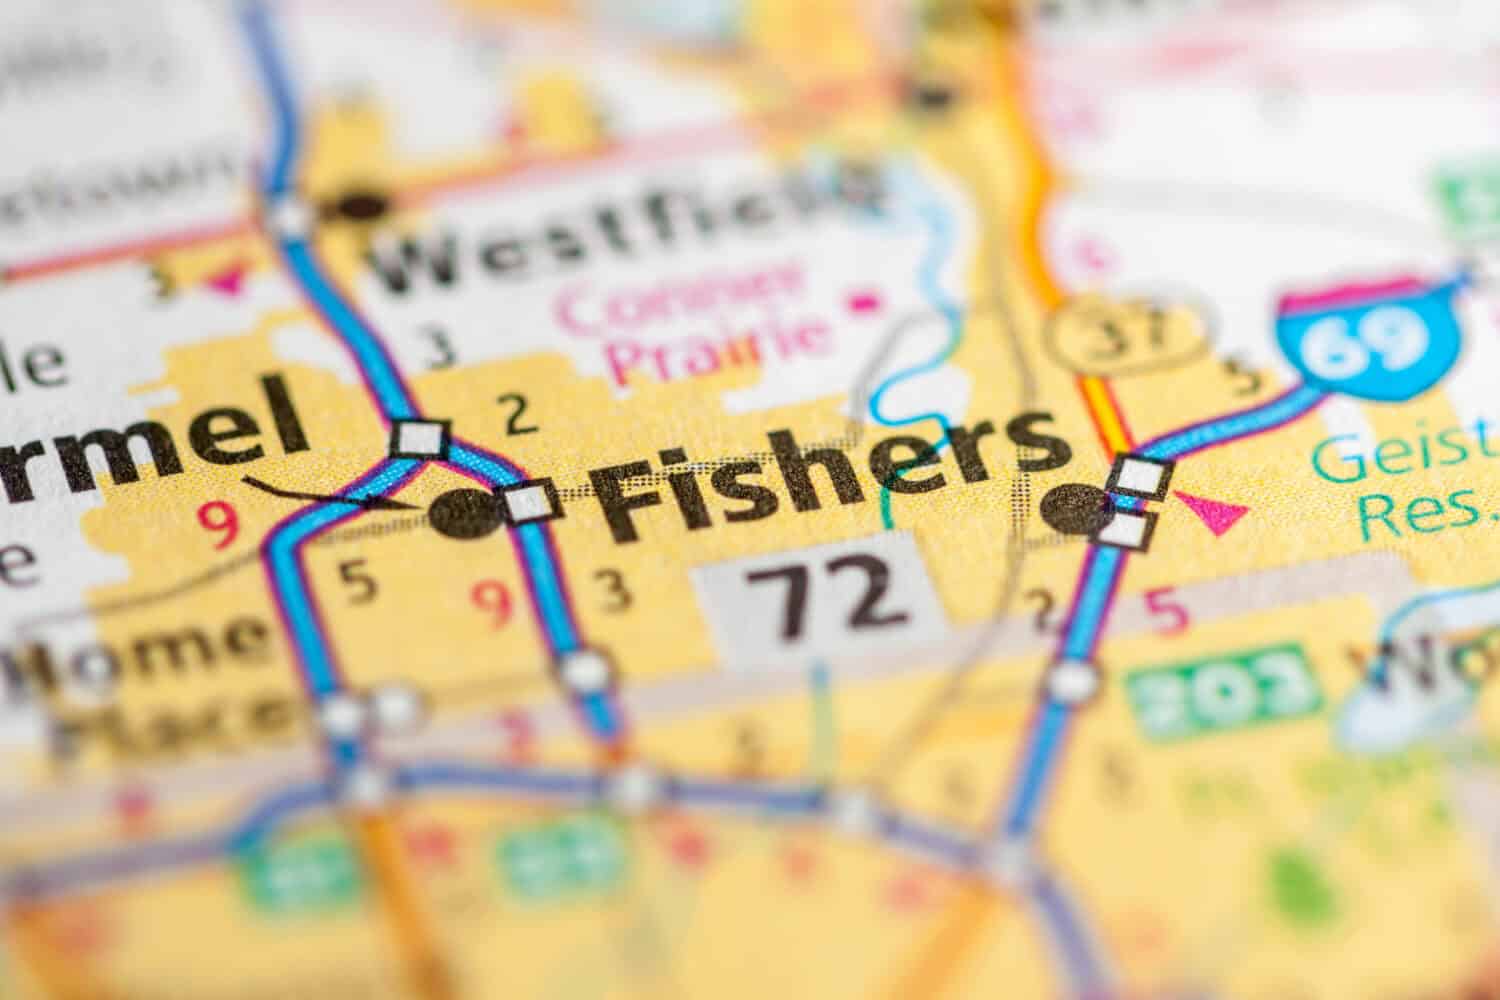 Fishers. Indiana. USA